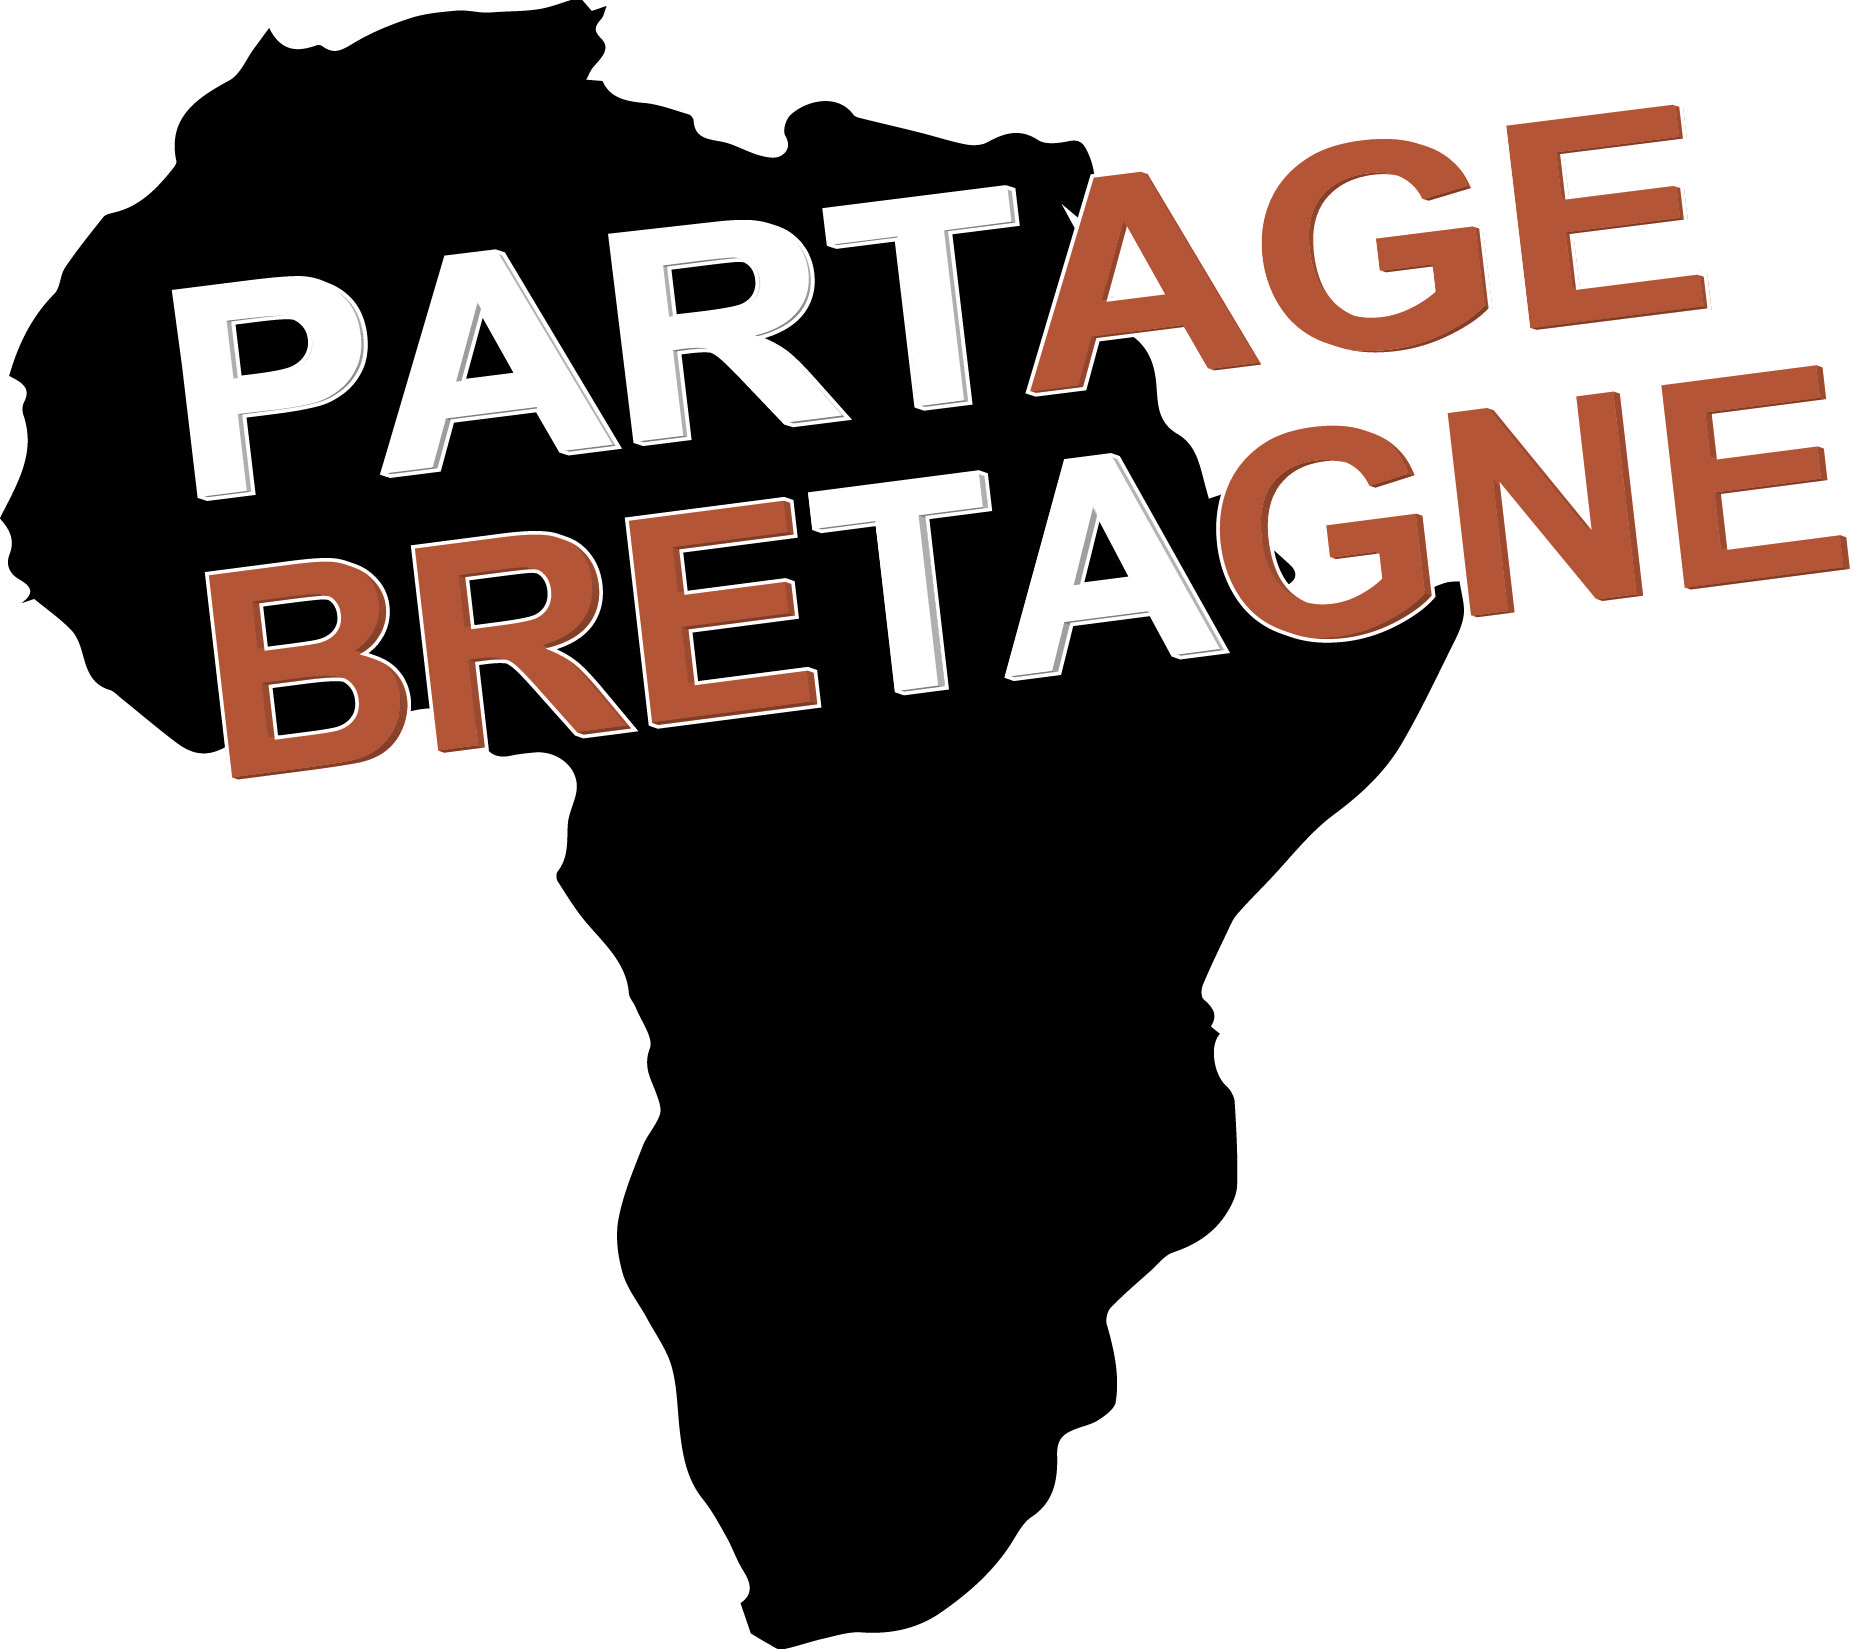 PARTAGE BRETAGNE logotype